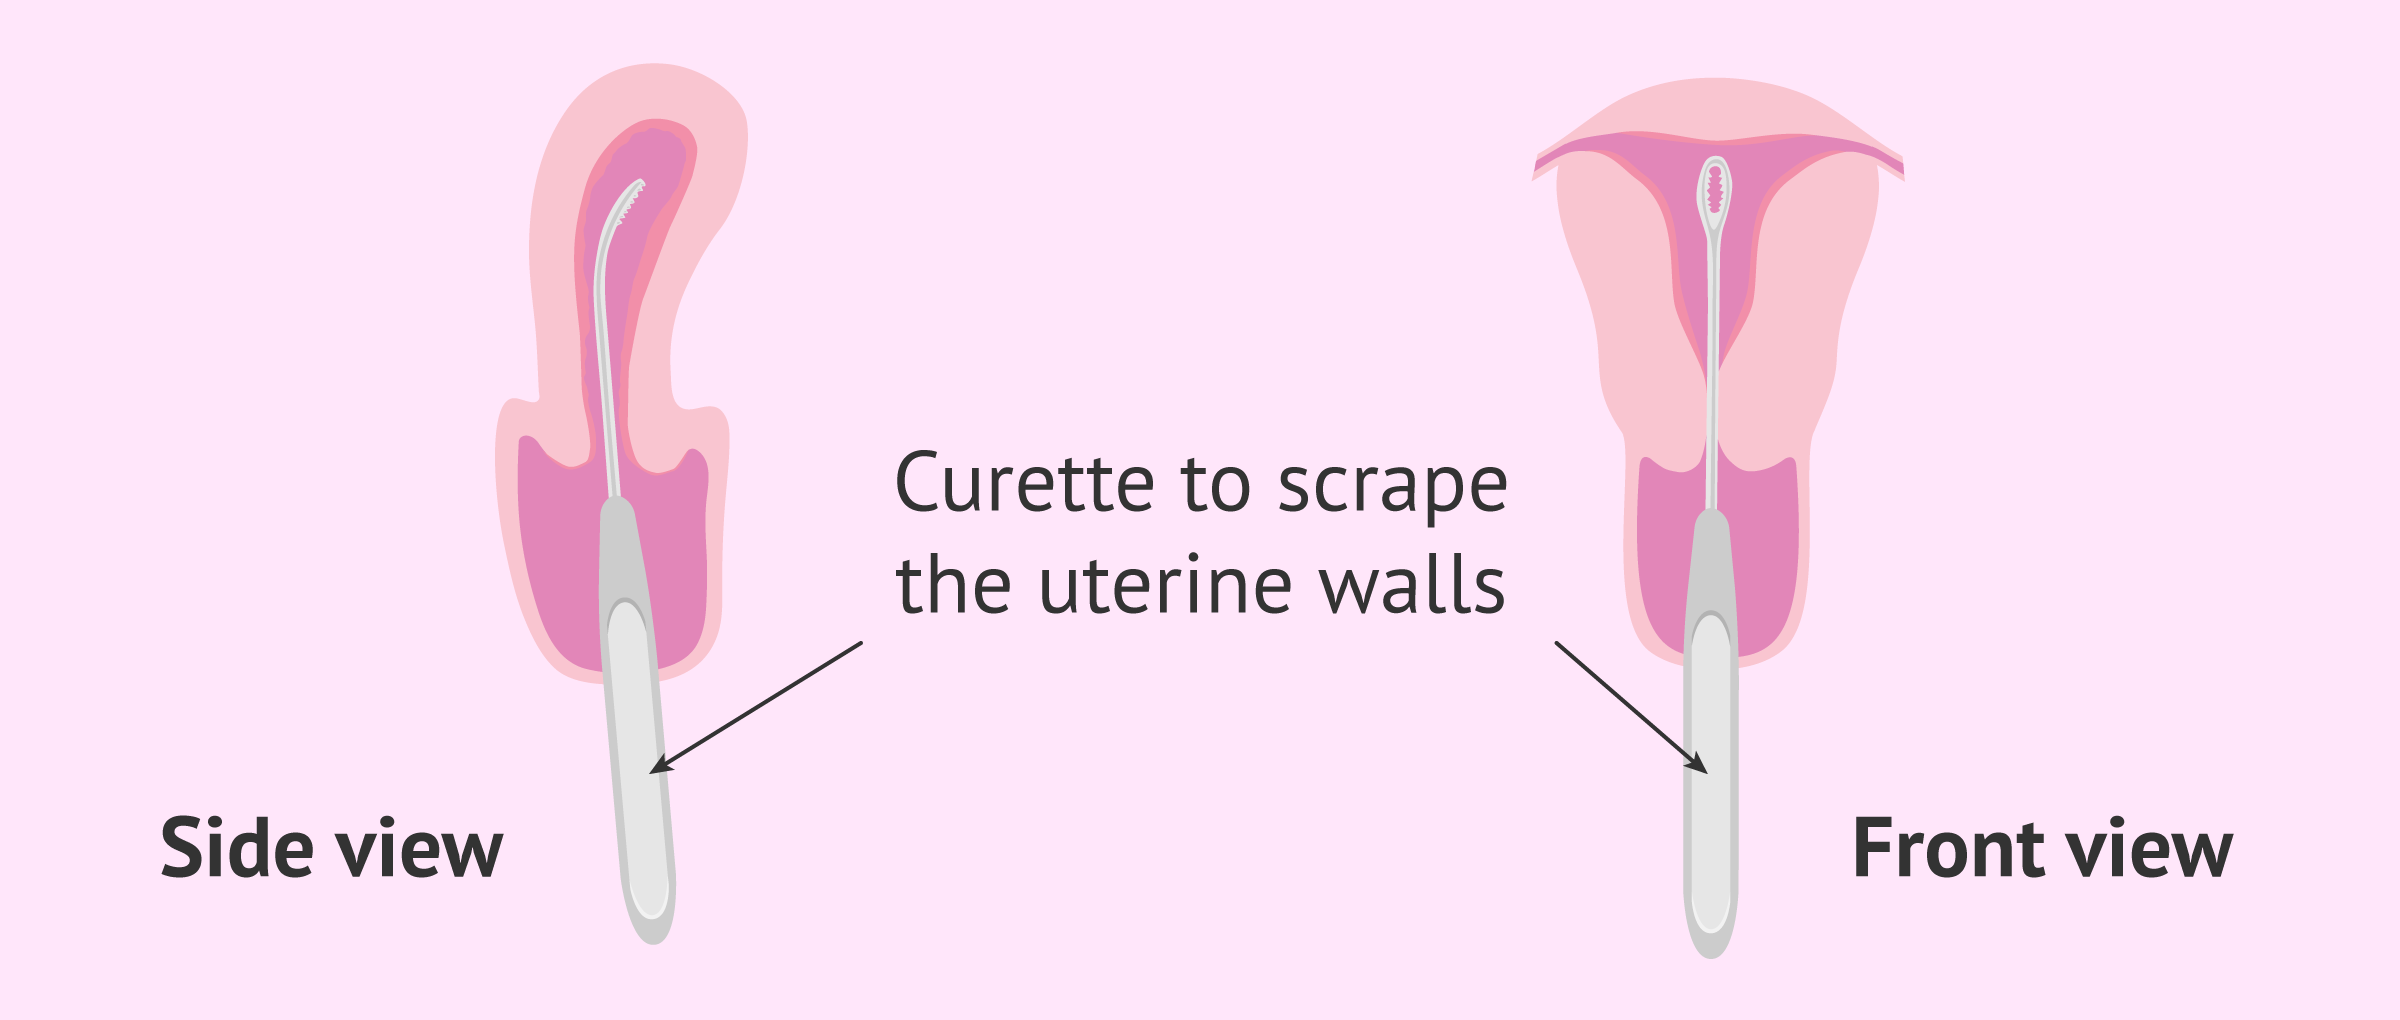 Curettage of the uterine walls